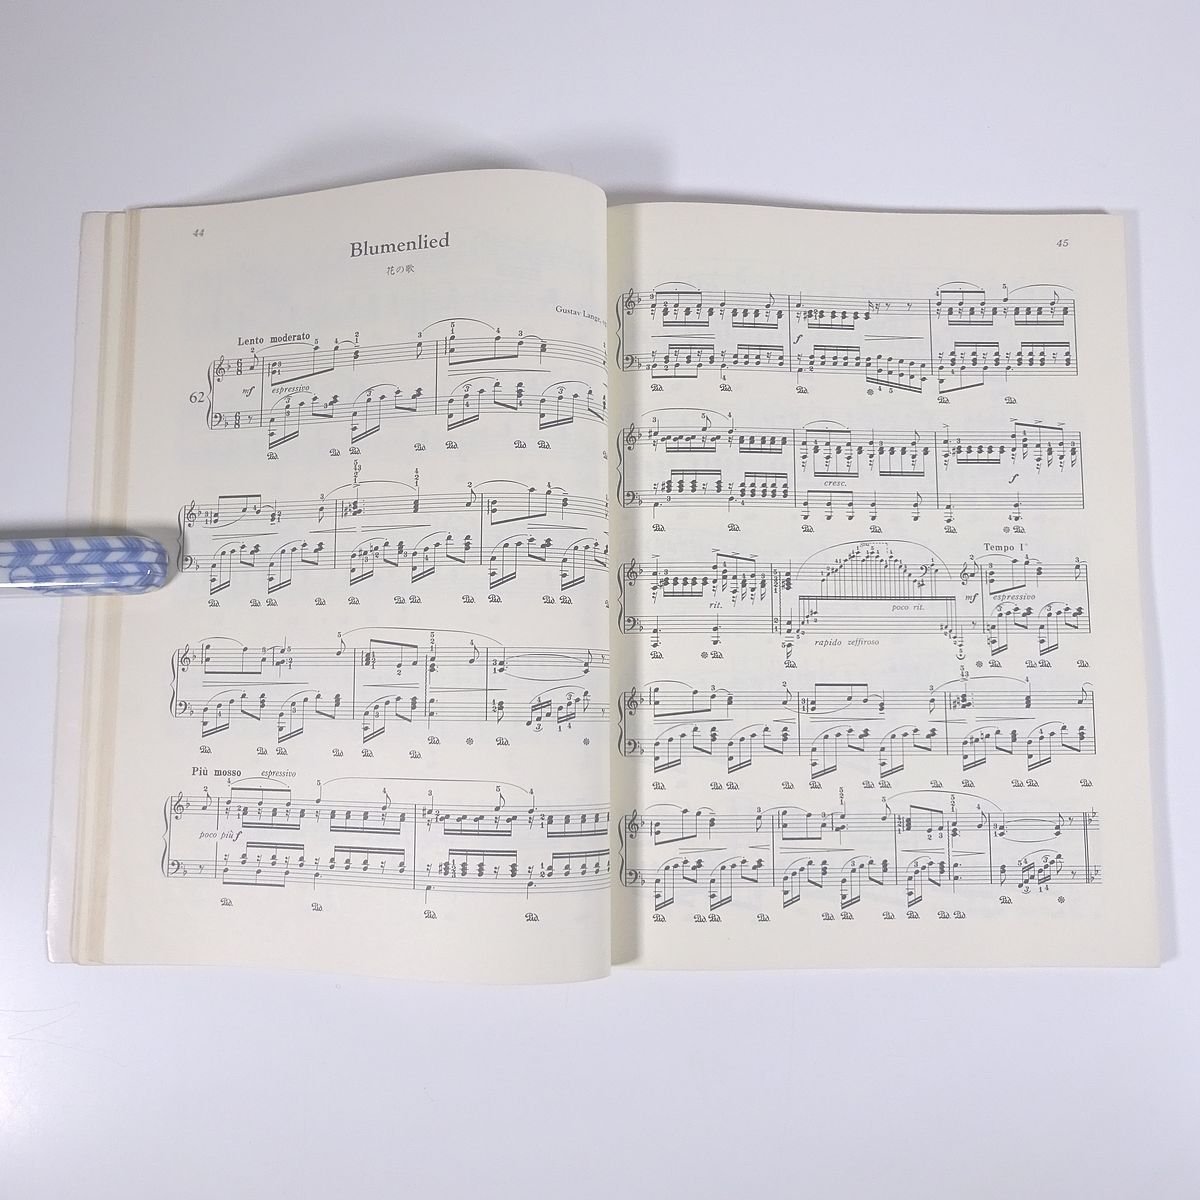 [ musical score ] piano masterpiece 110 selection GRADE B DOREMIdoremi musical score publish company 1993 large book@ music Classic piano 